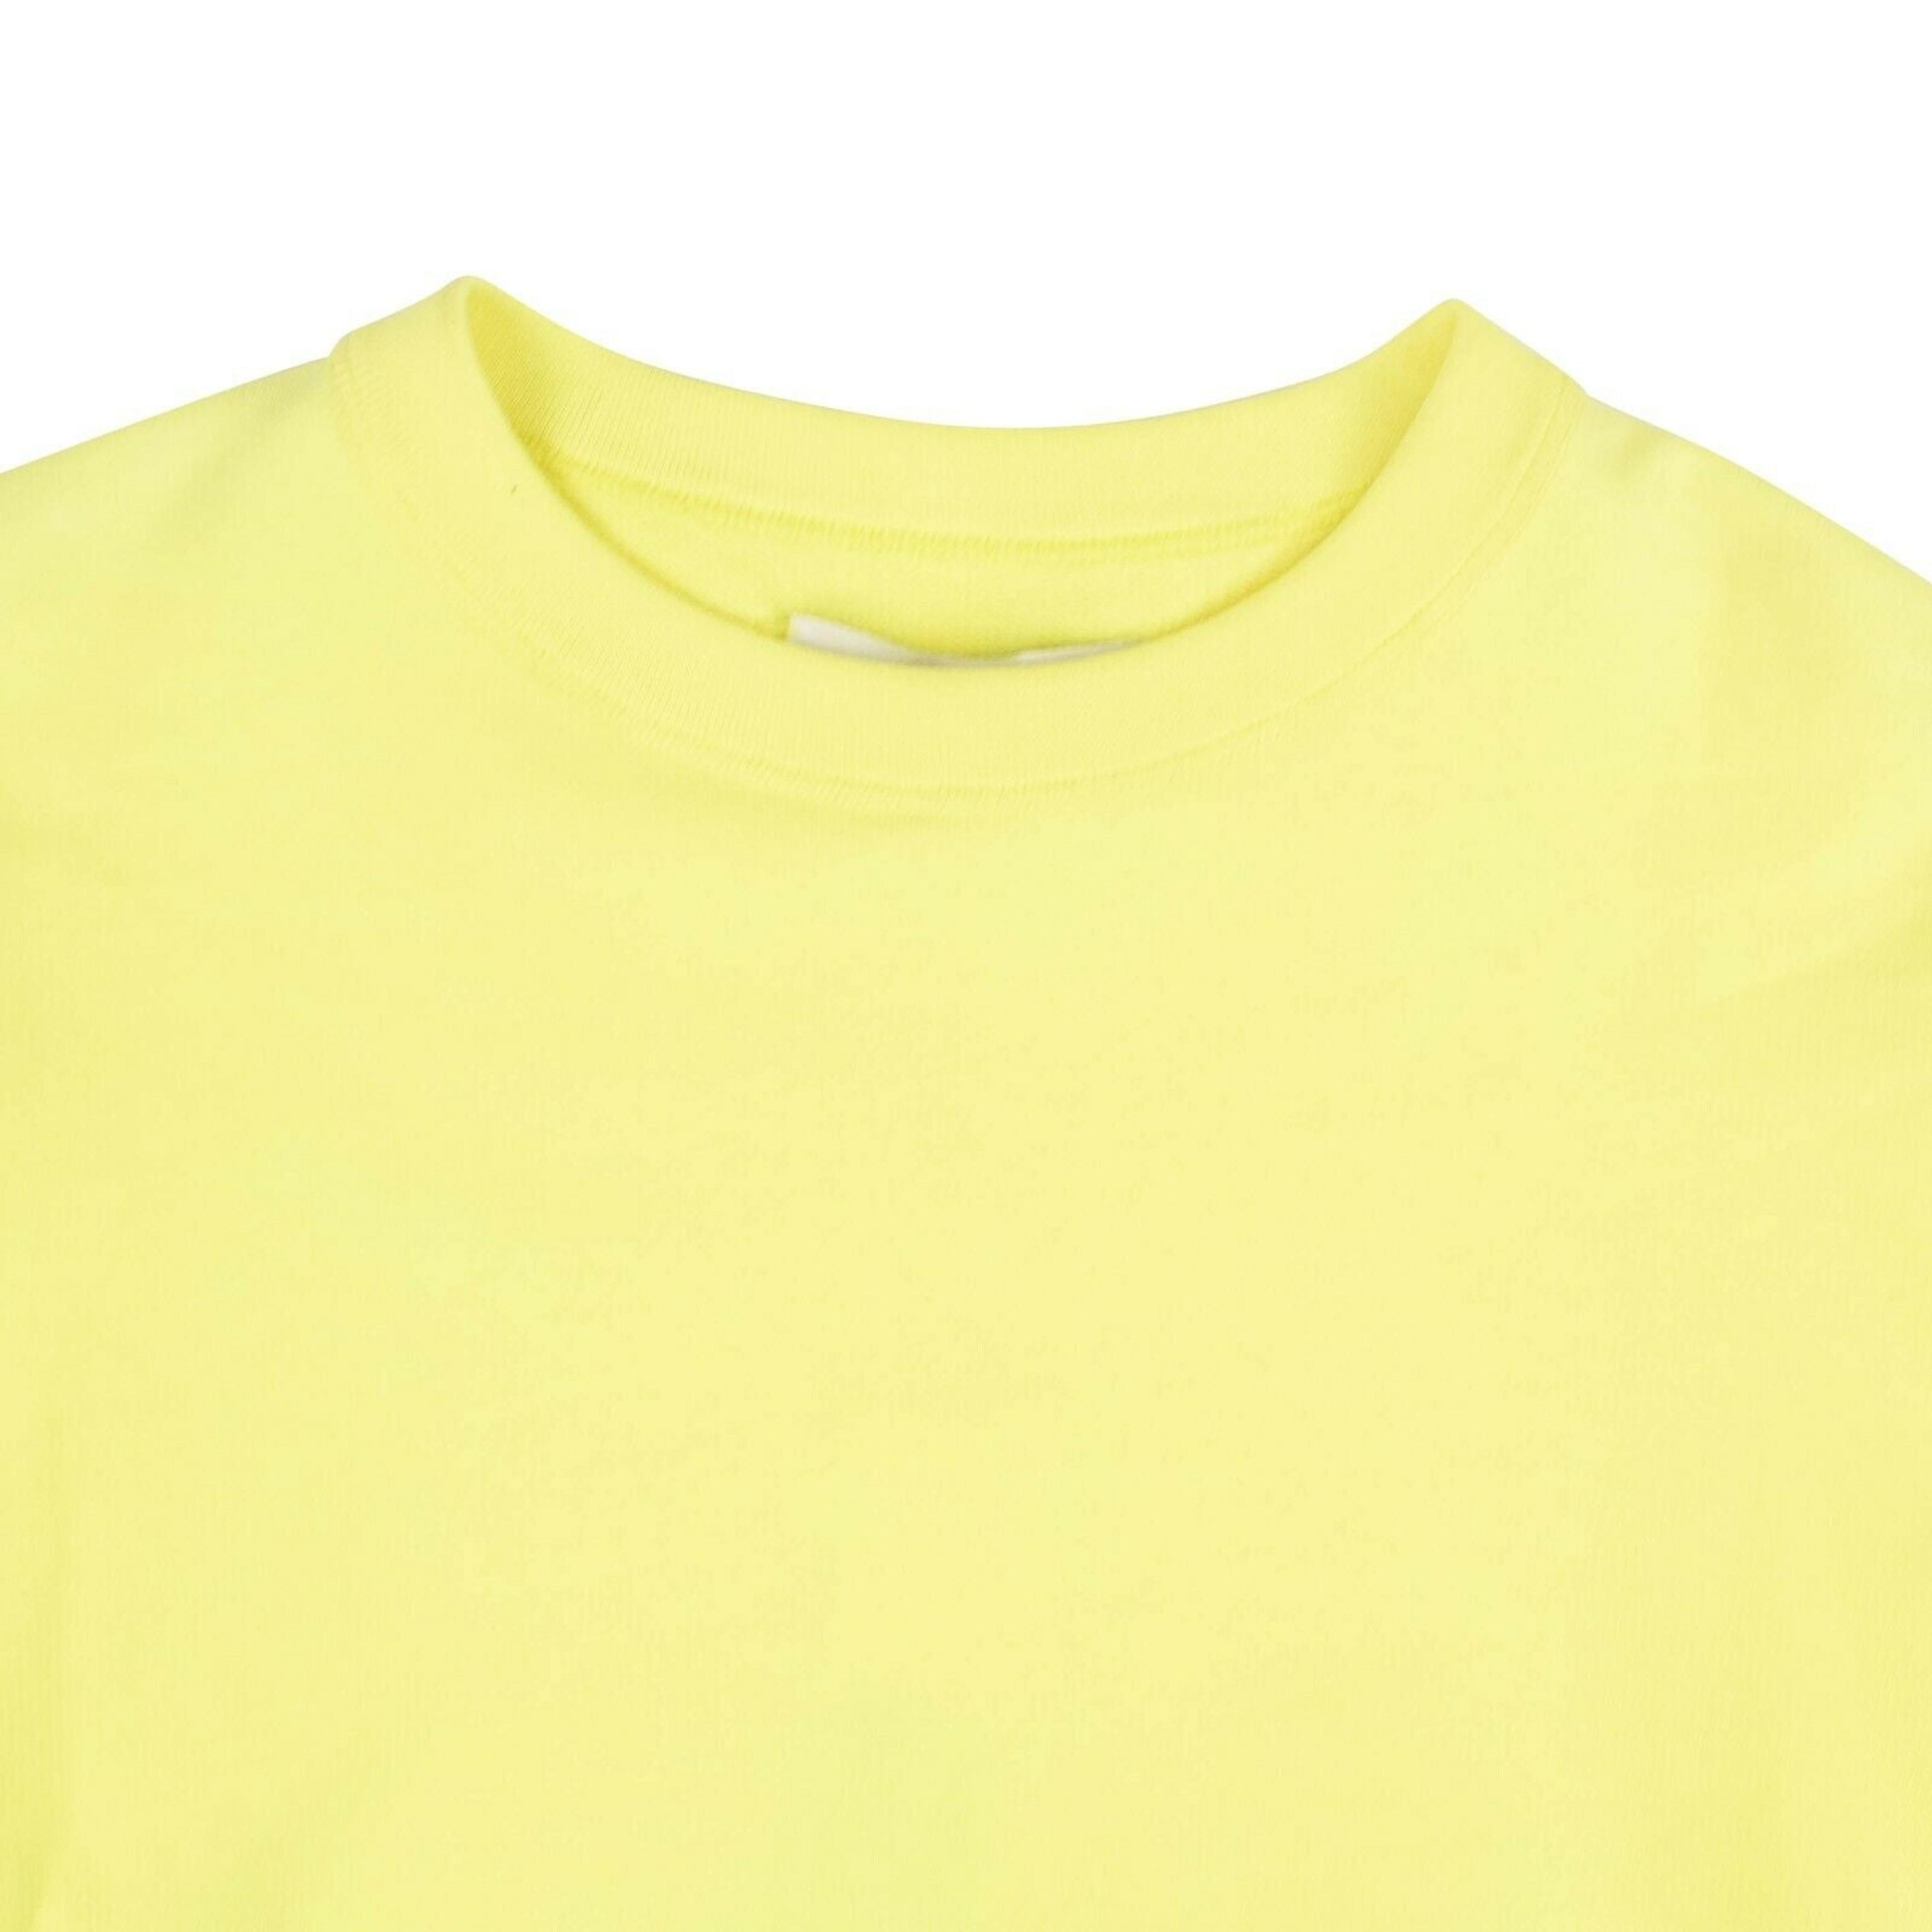 Alternate View 2 of Neon Yellow Cropped Crewneck Sweatshirt